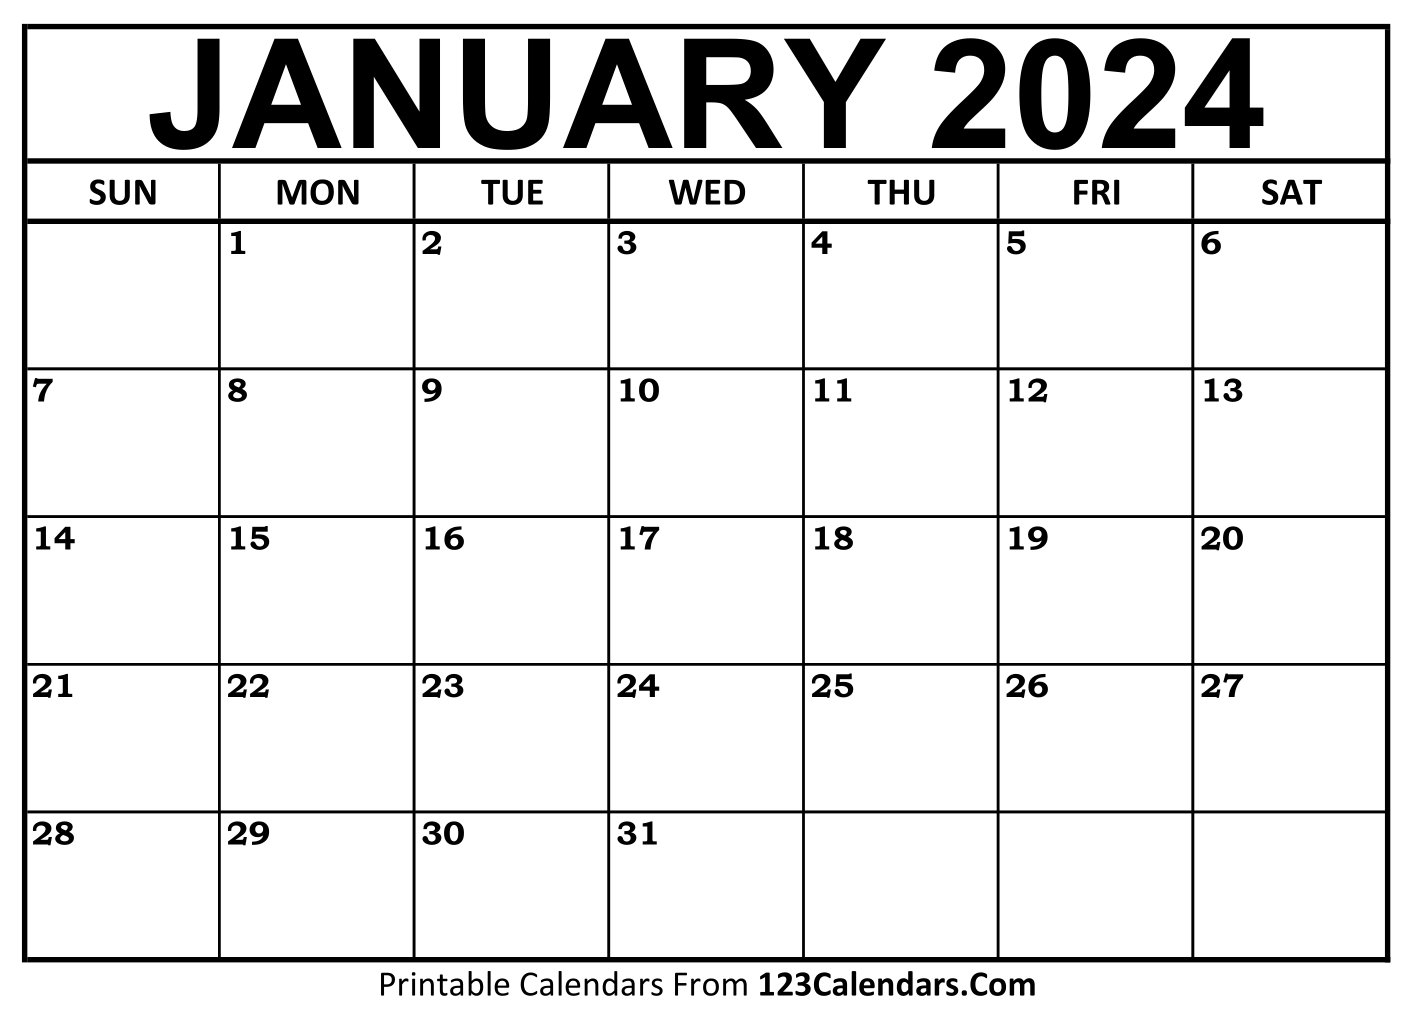 Printable January 2024 Calendar Templates - 123Calendars for Blank January 2024 Calendar Free Printable